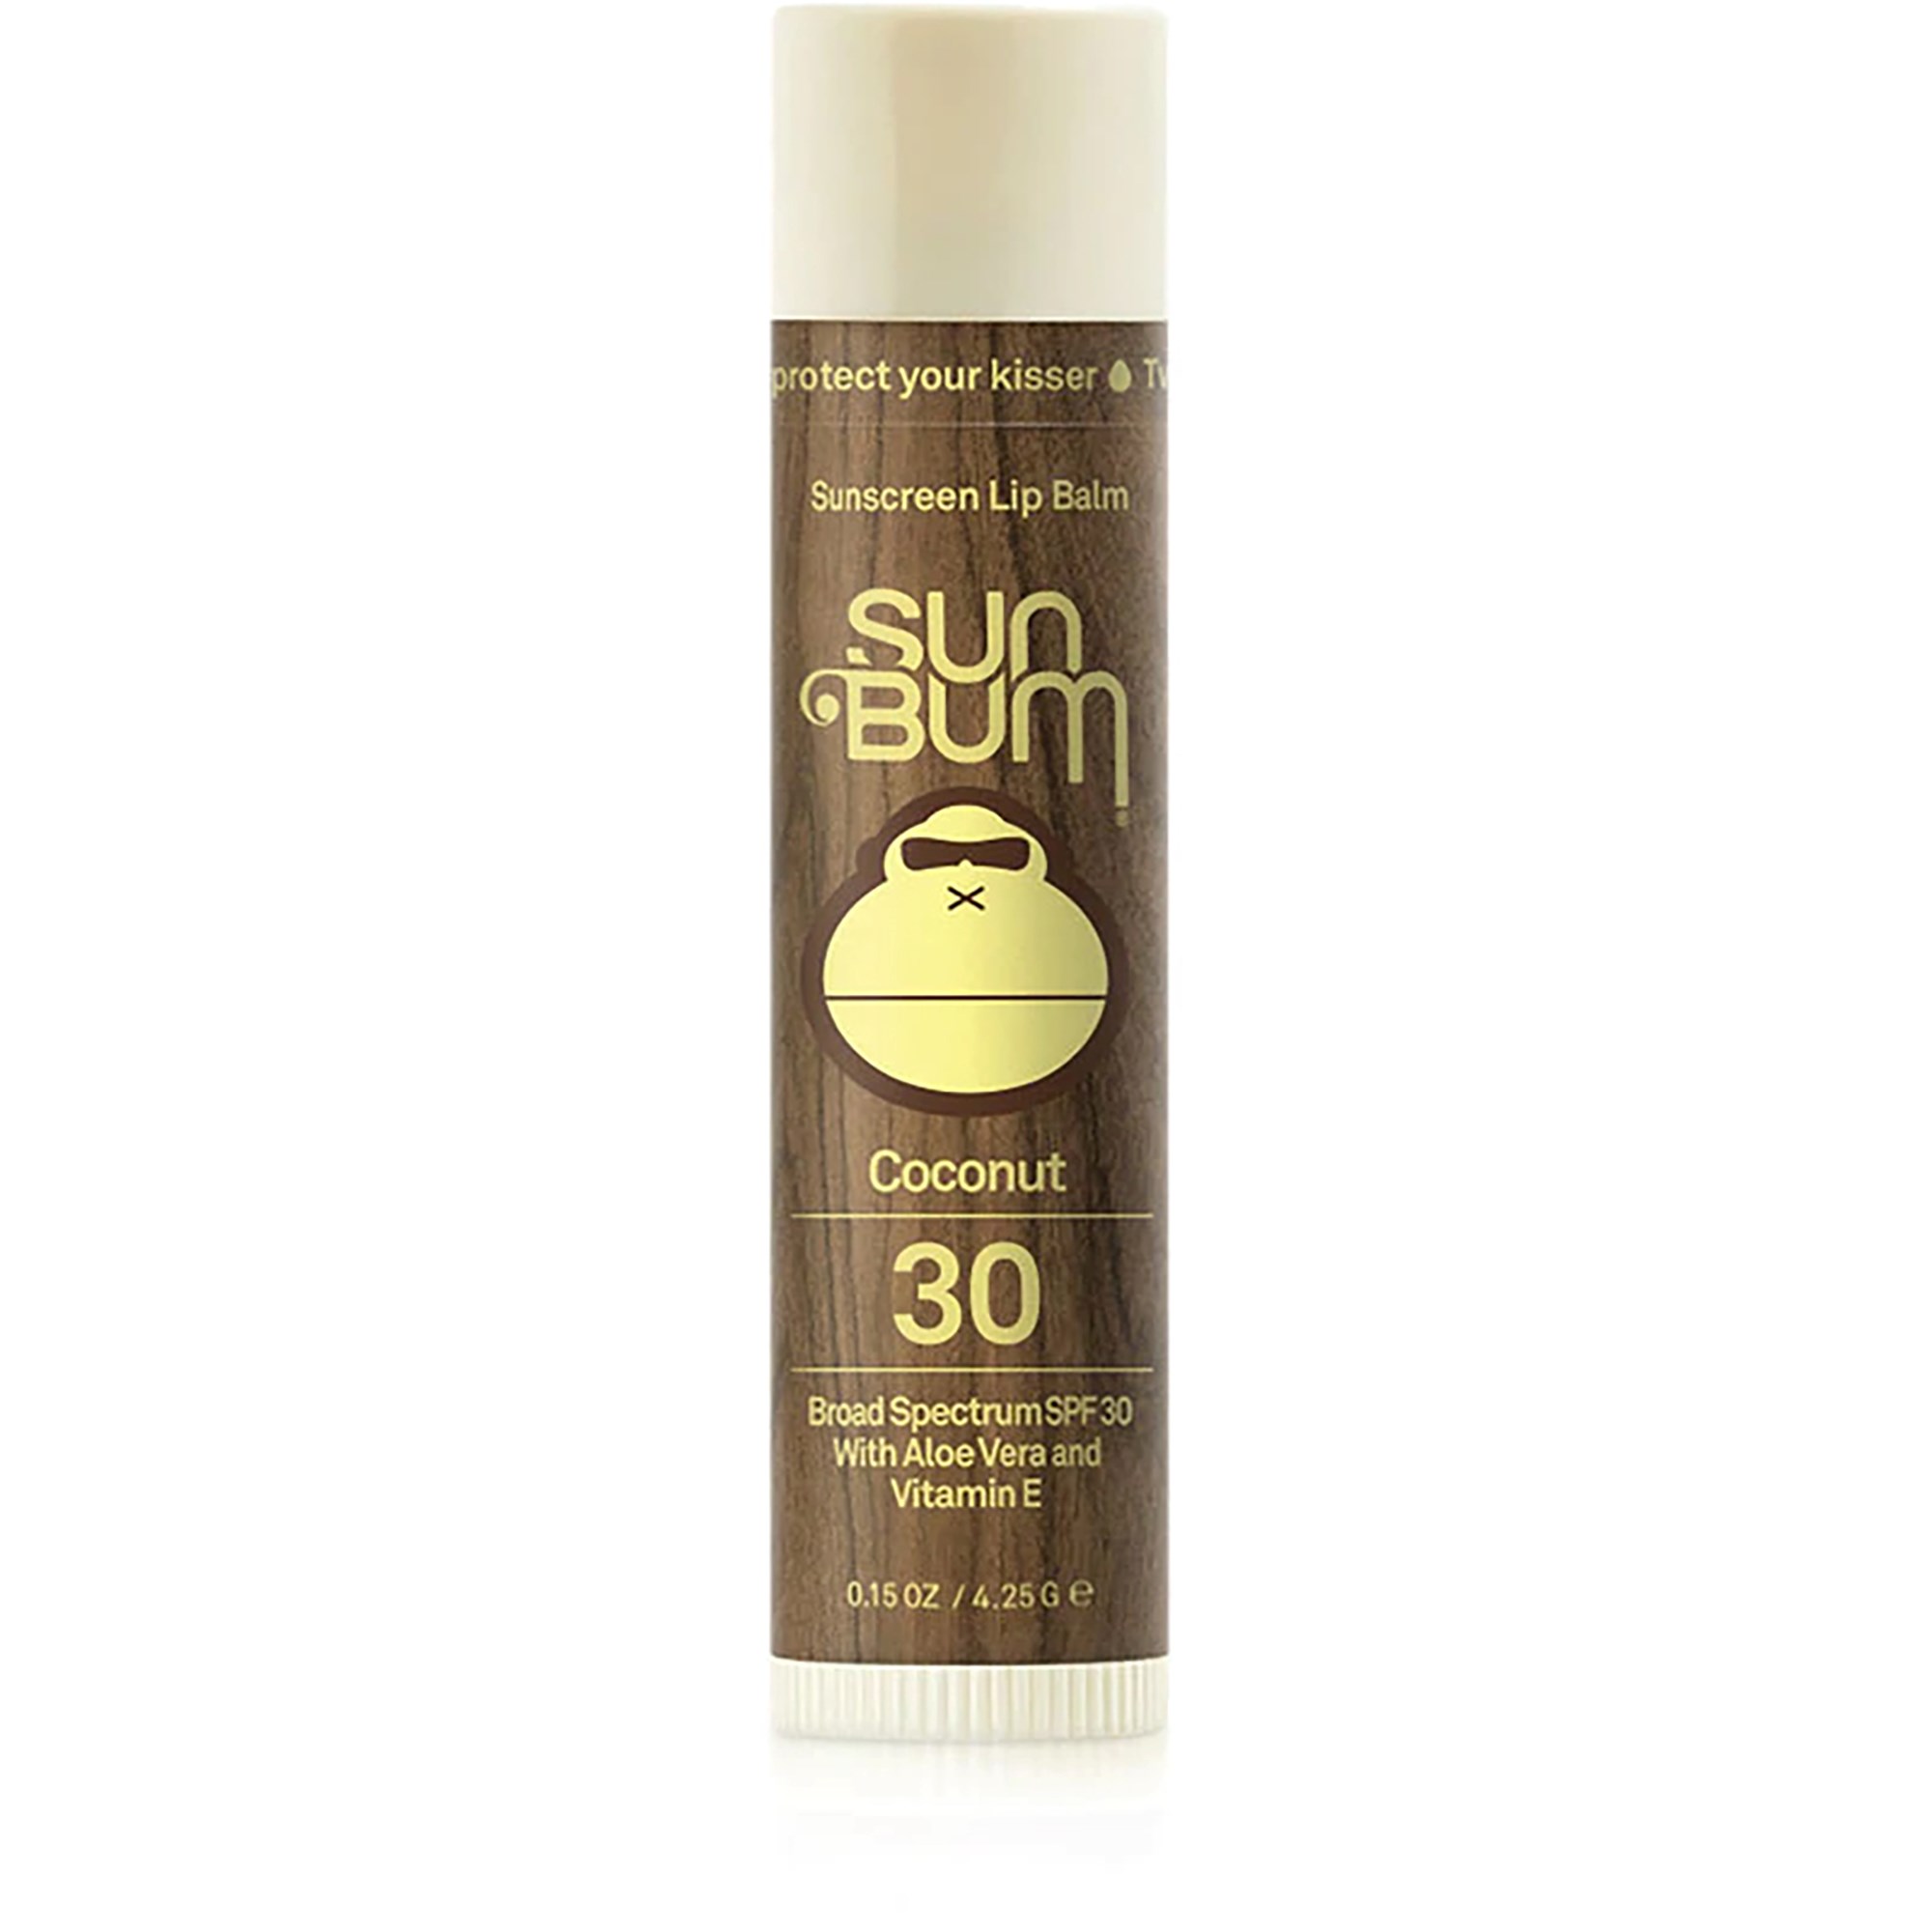 Bilde av Sun Bum Original Spf 30 Sunscreen Lip Balm Coconut